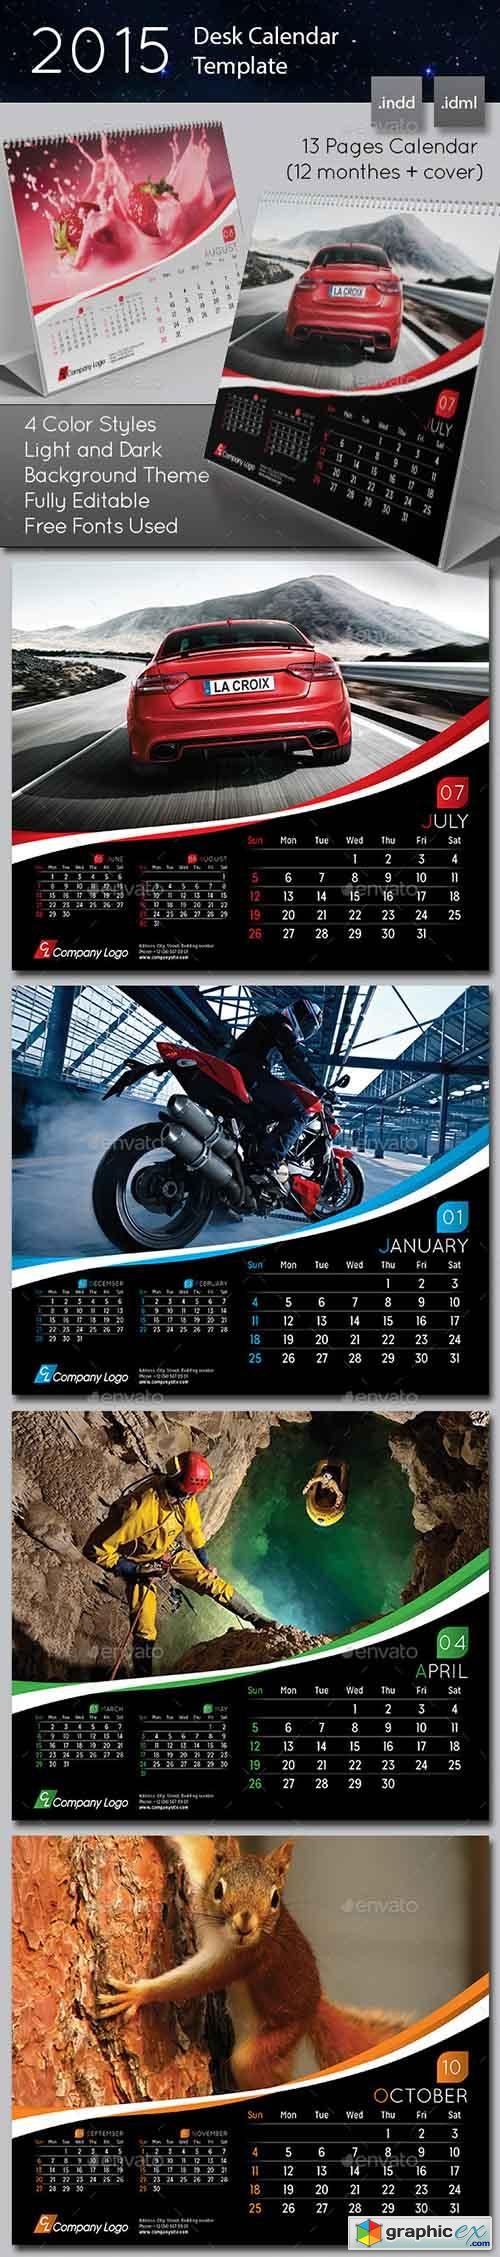 2015 Desk Calendar template  9128199